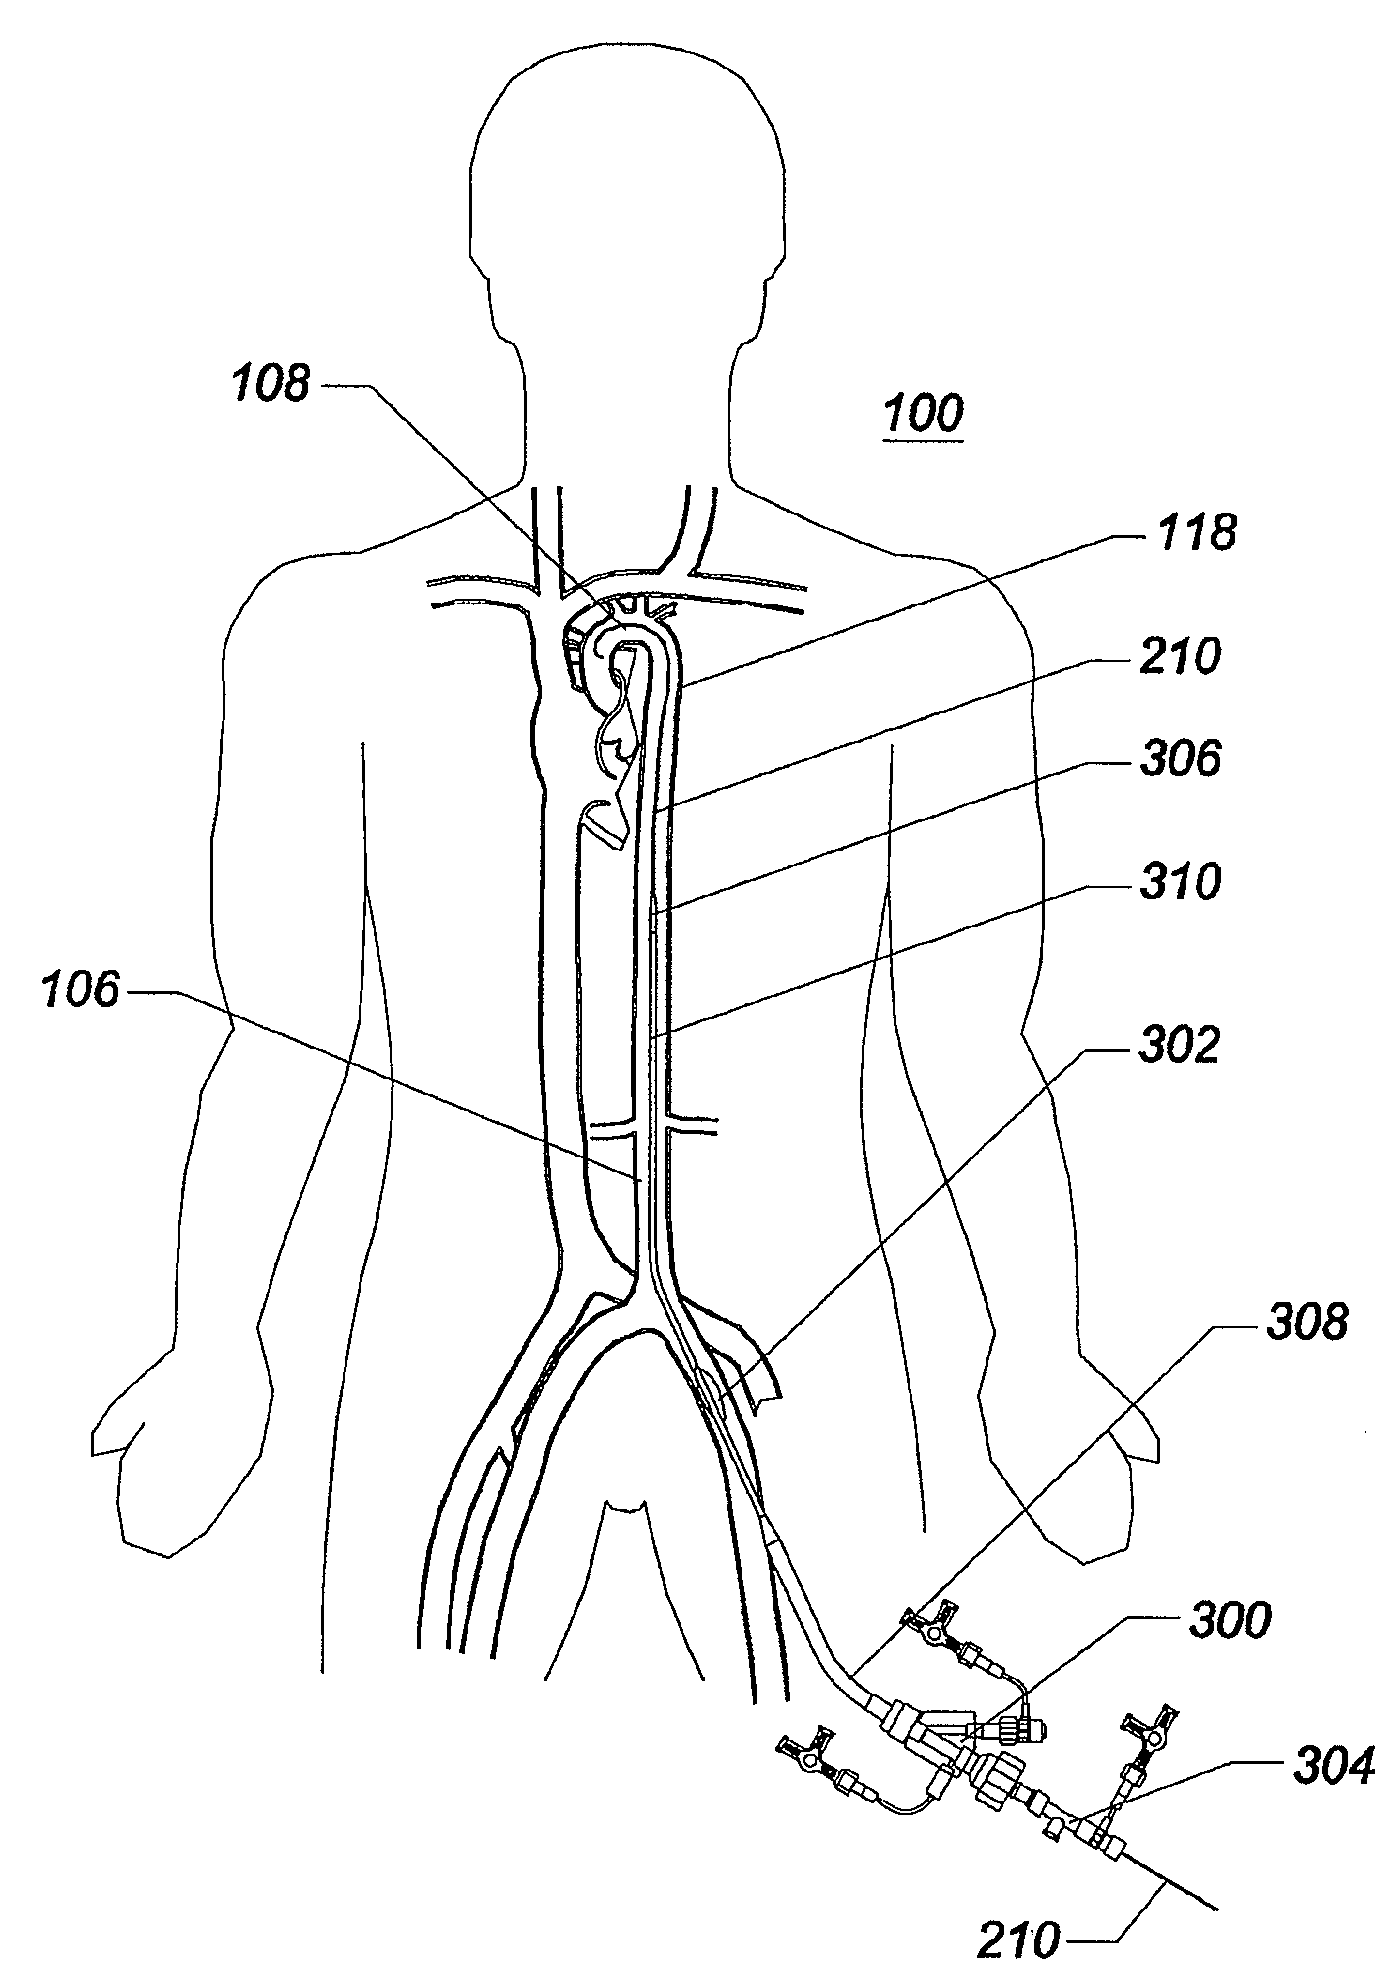 Expandable intra-aortic balloon pump sheath